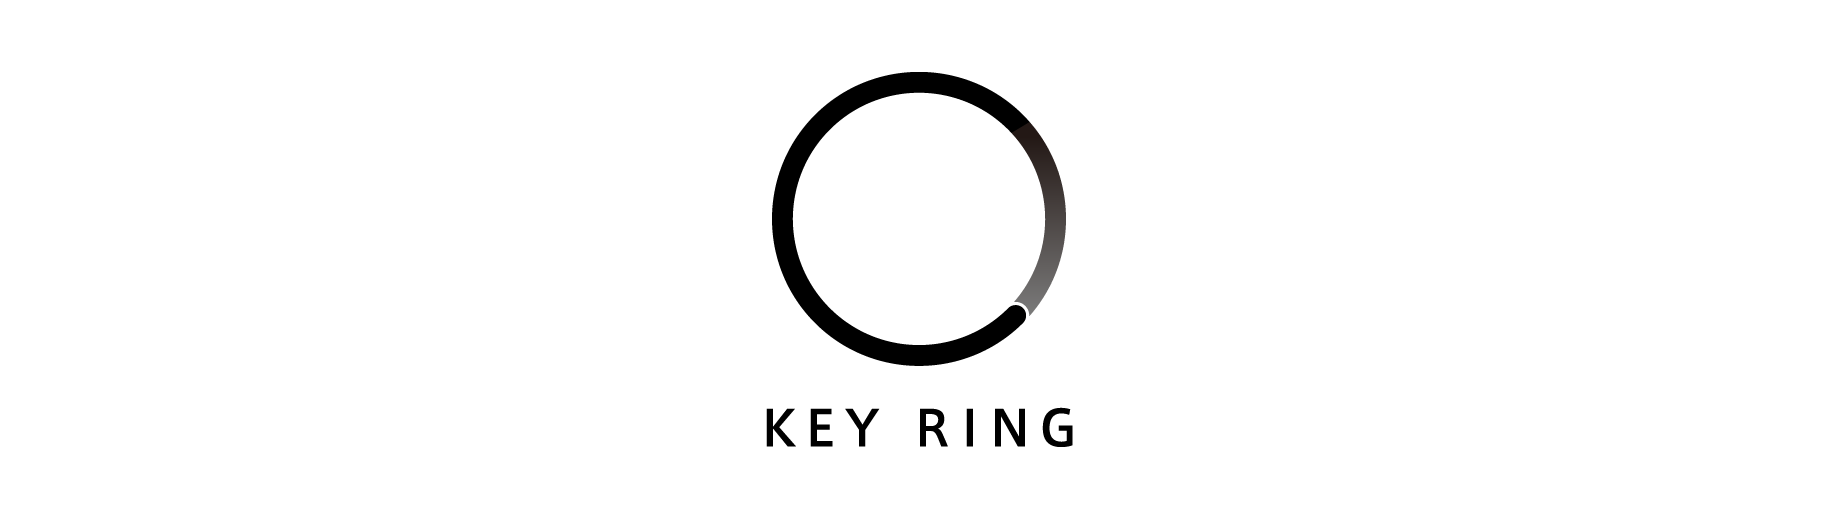 KeyRing_logo 